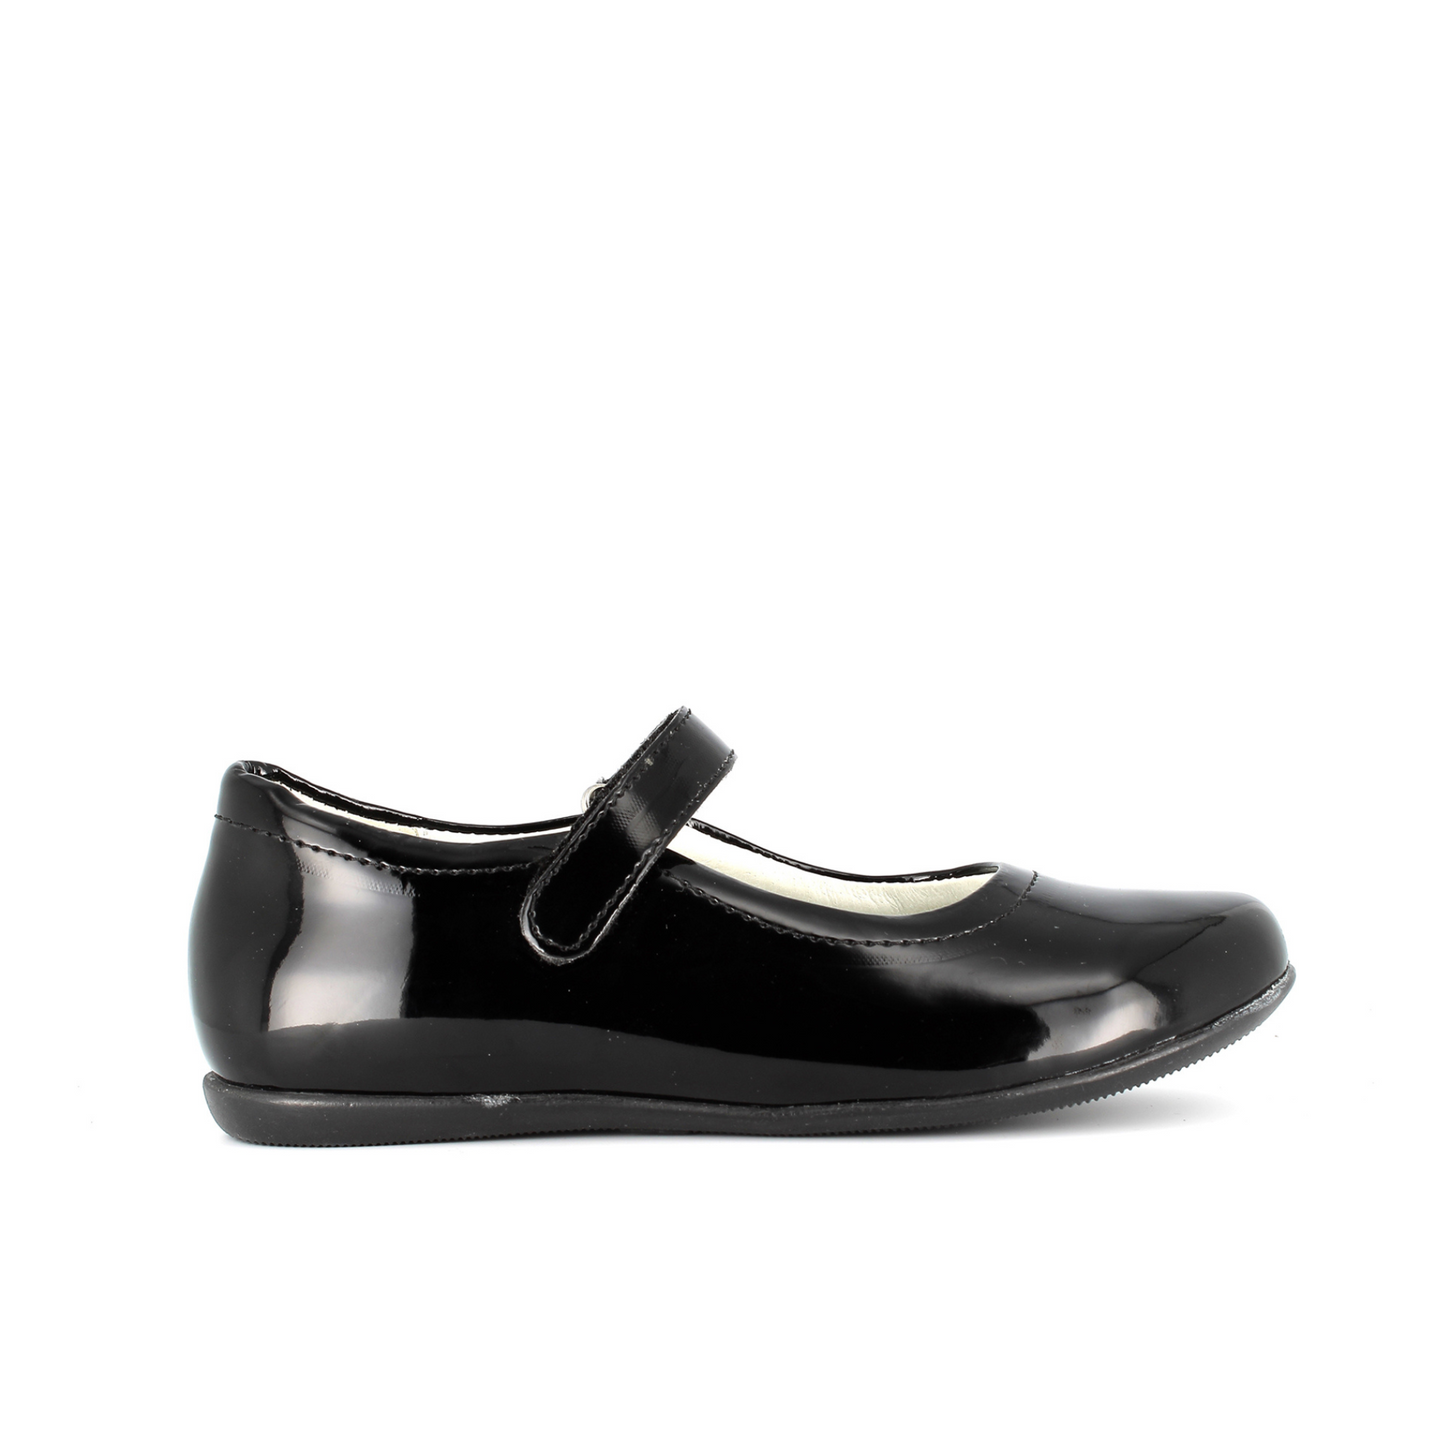 Zura Black Patent Leather Ballet Flat Girls School Shoe